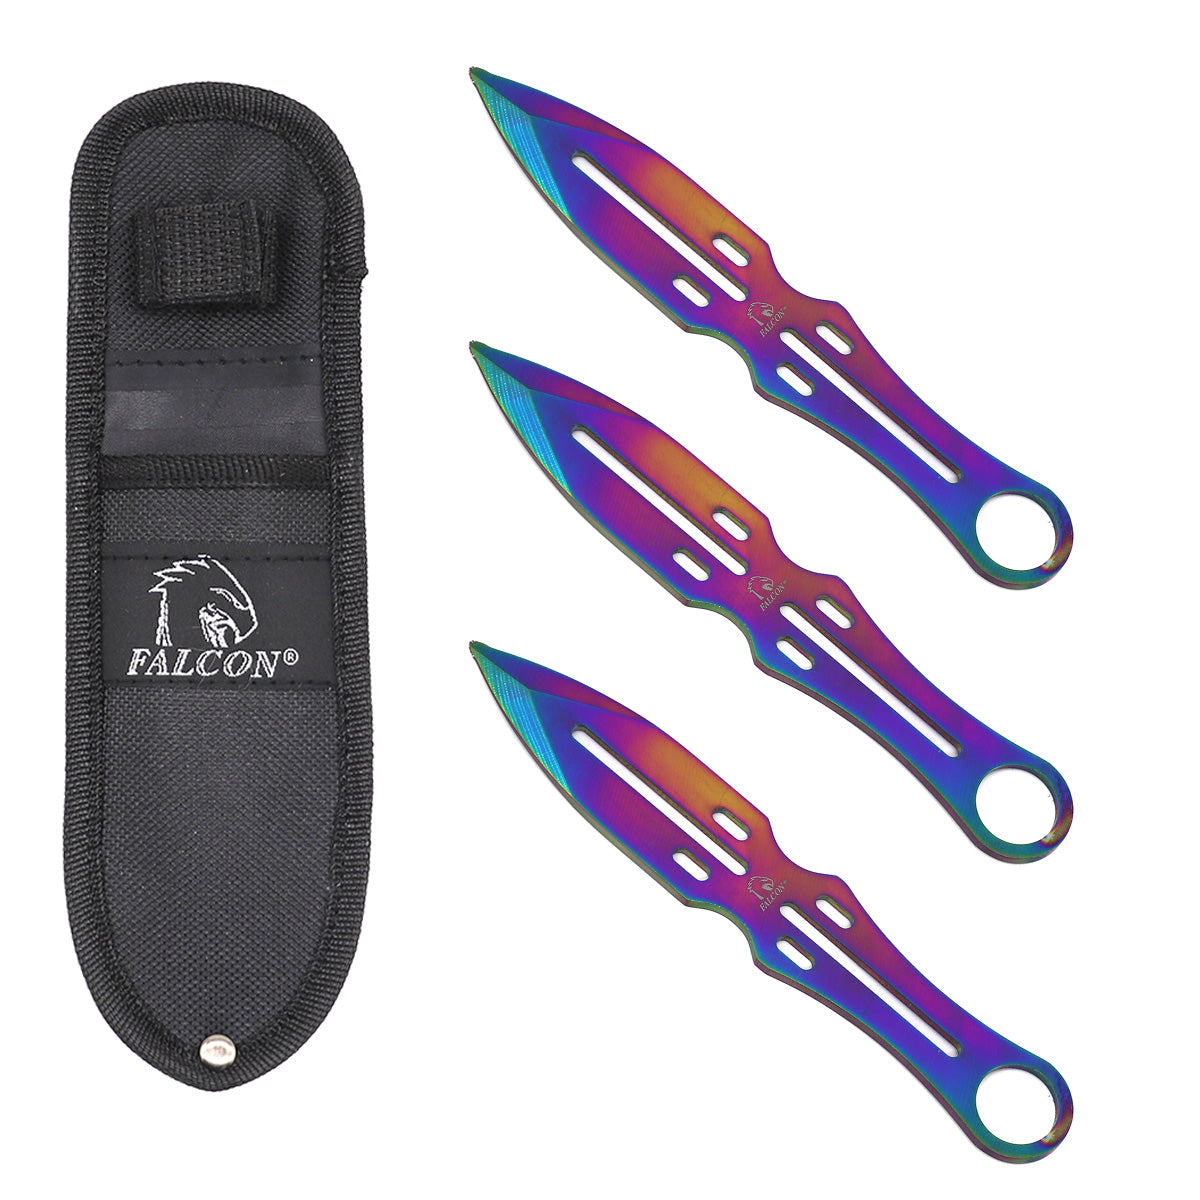 falcon-3-pcs-rainbow-throwing-knife-set